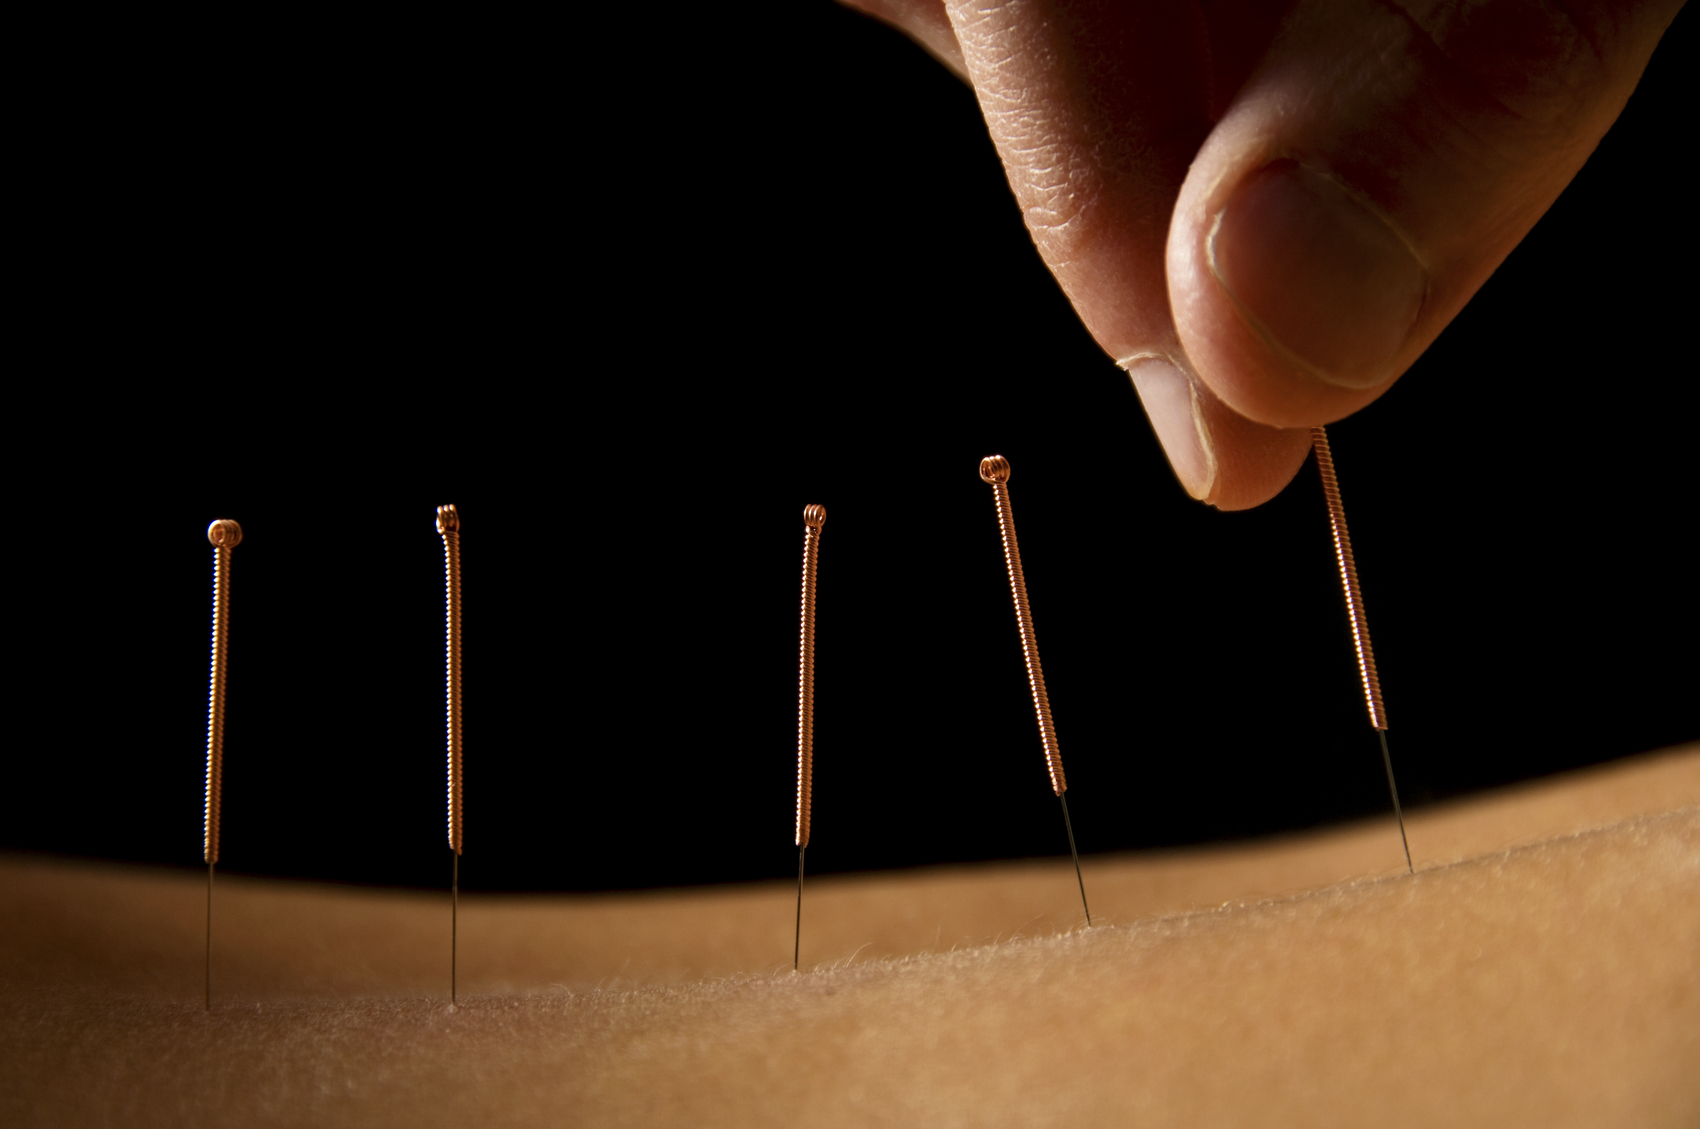 Acupuncture: An effective treatment for chronic headaches